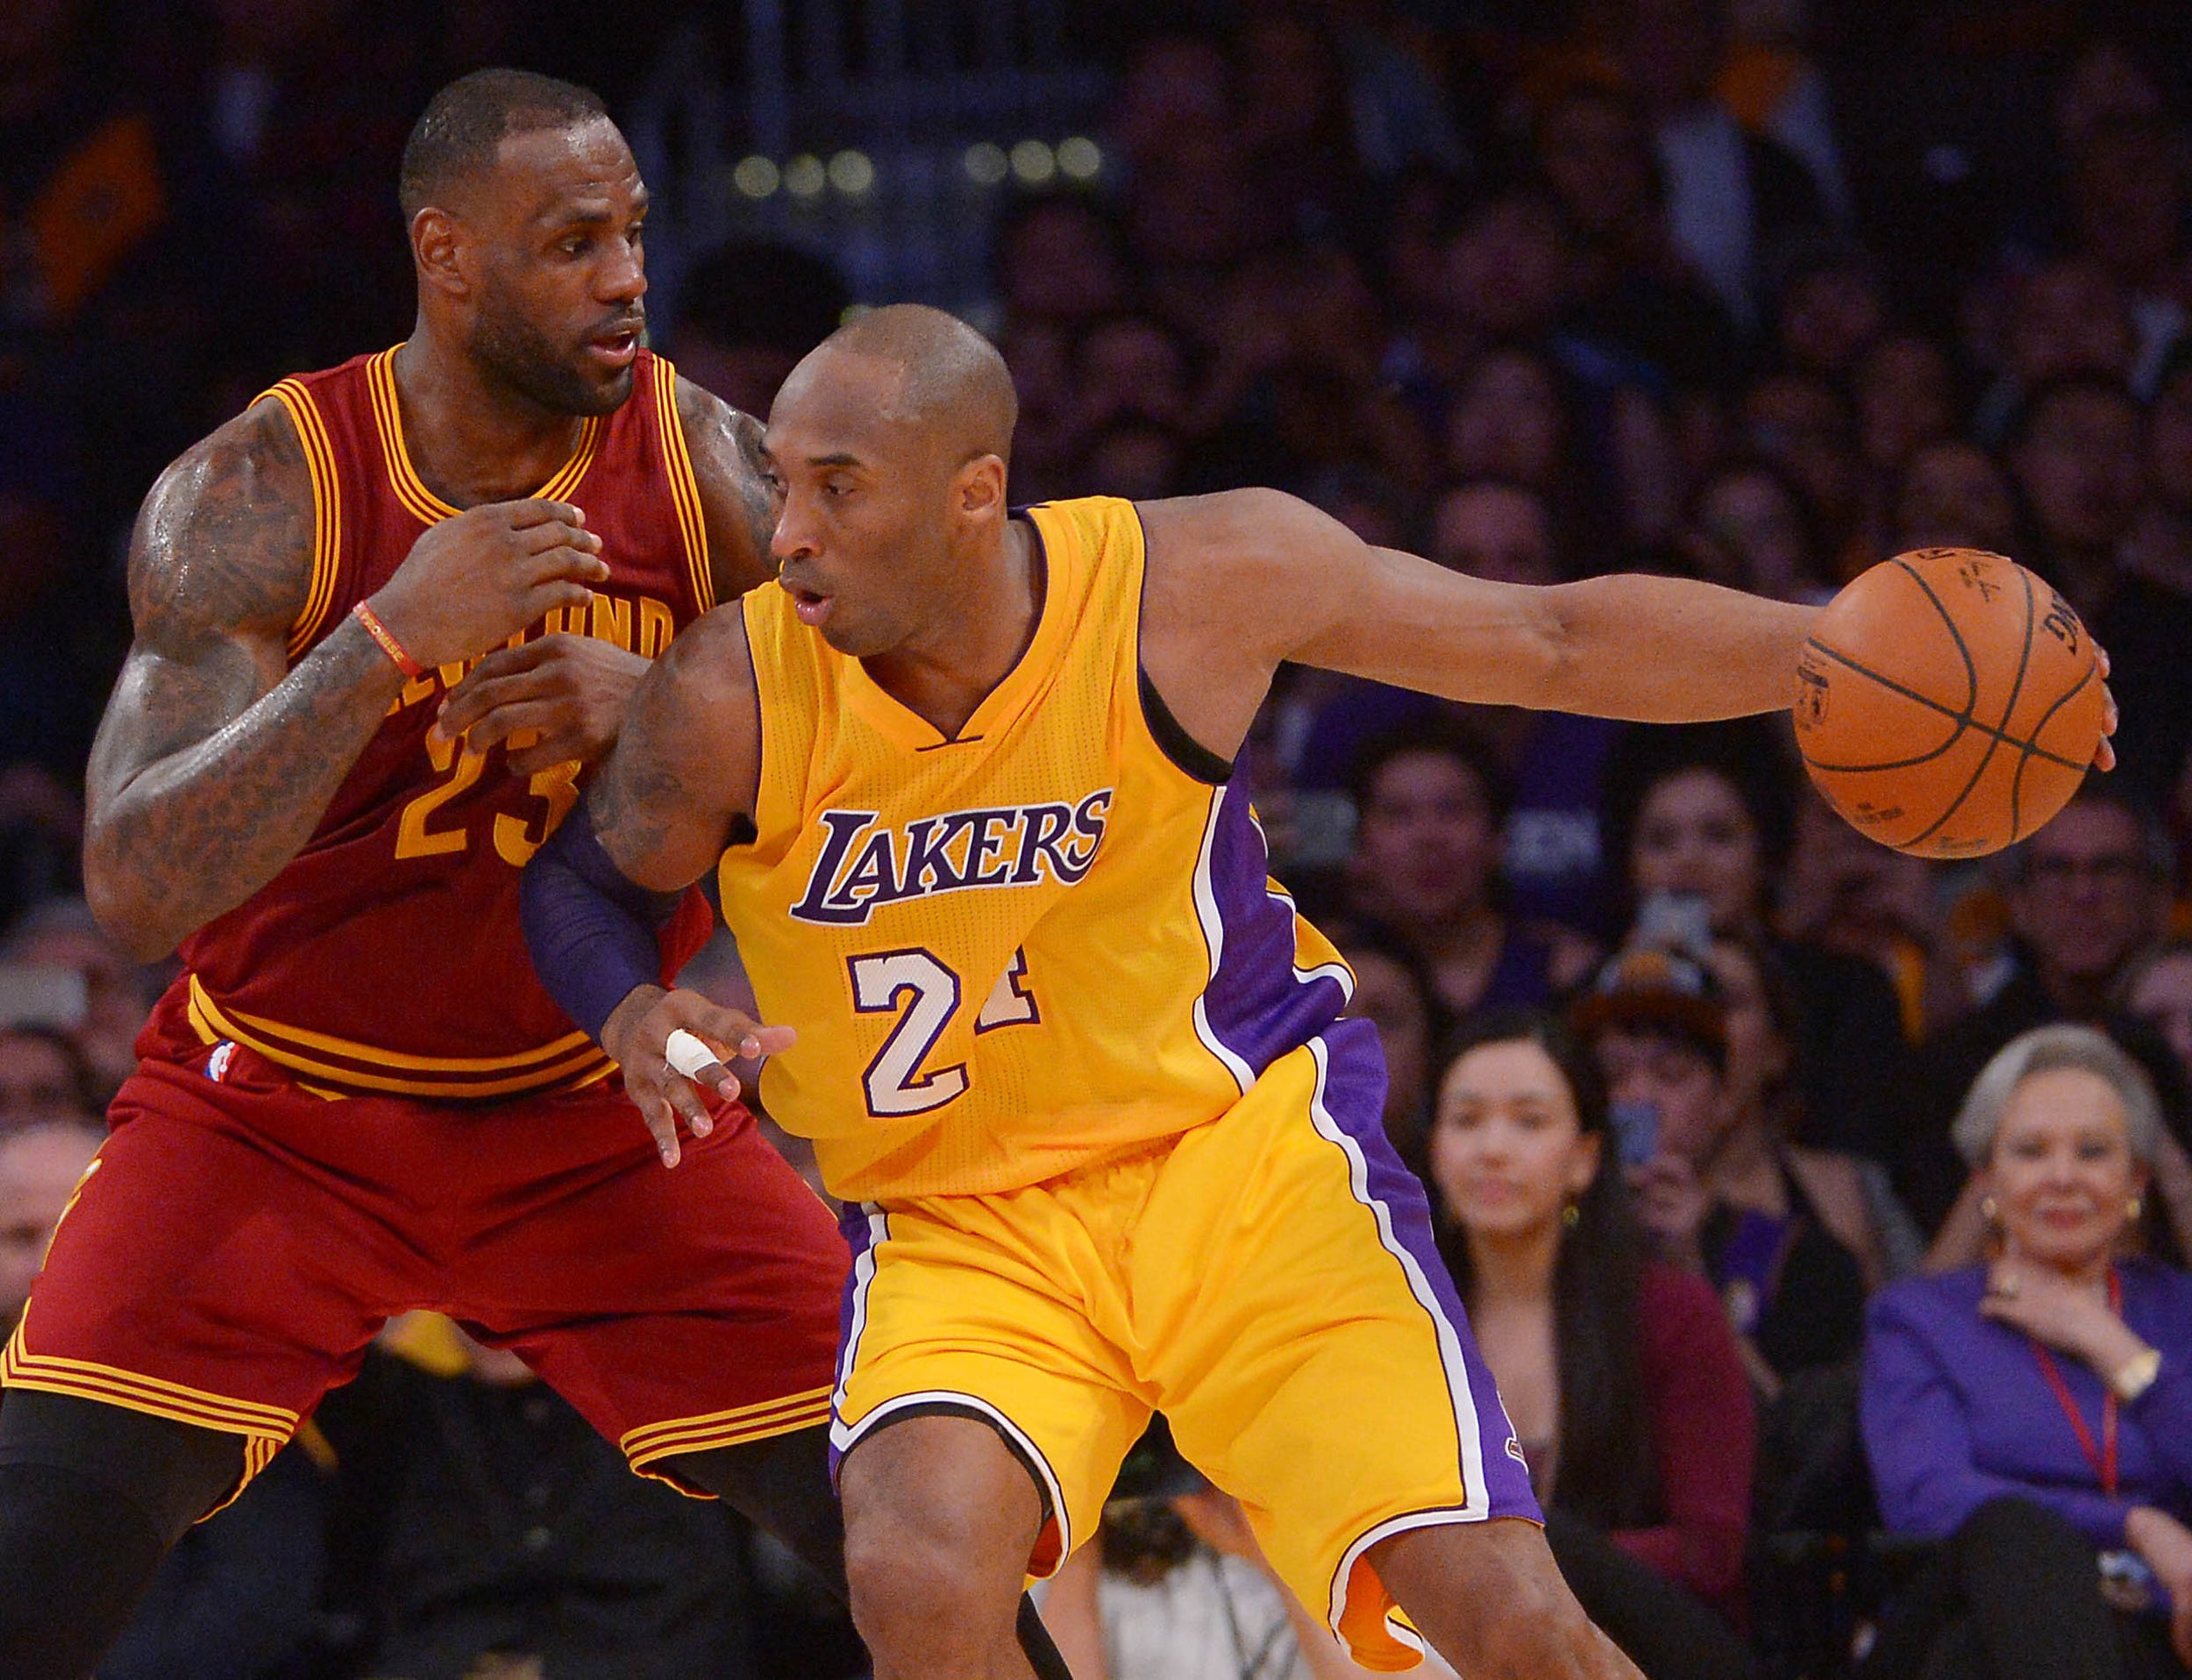 Kobe Bryant meant more to NBA players than LeBron James or Jordan